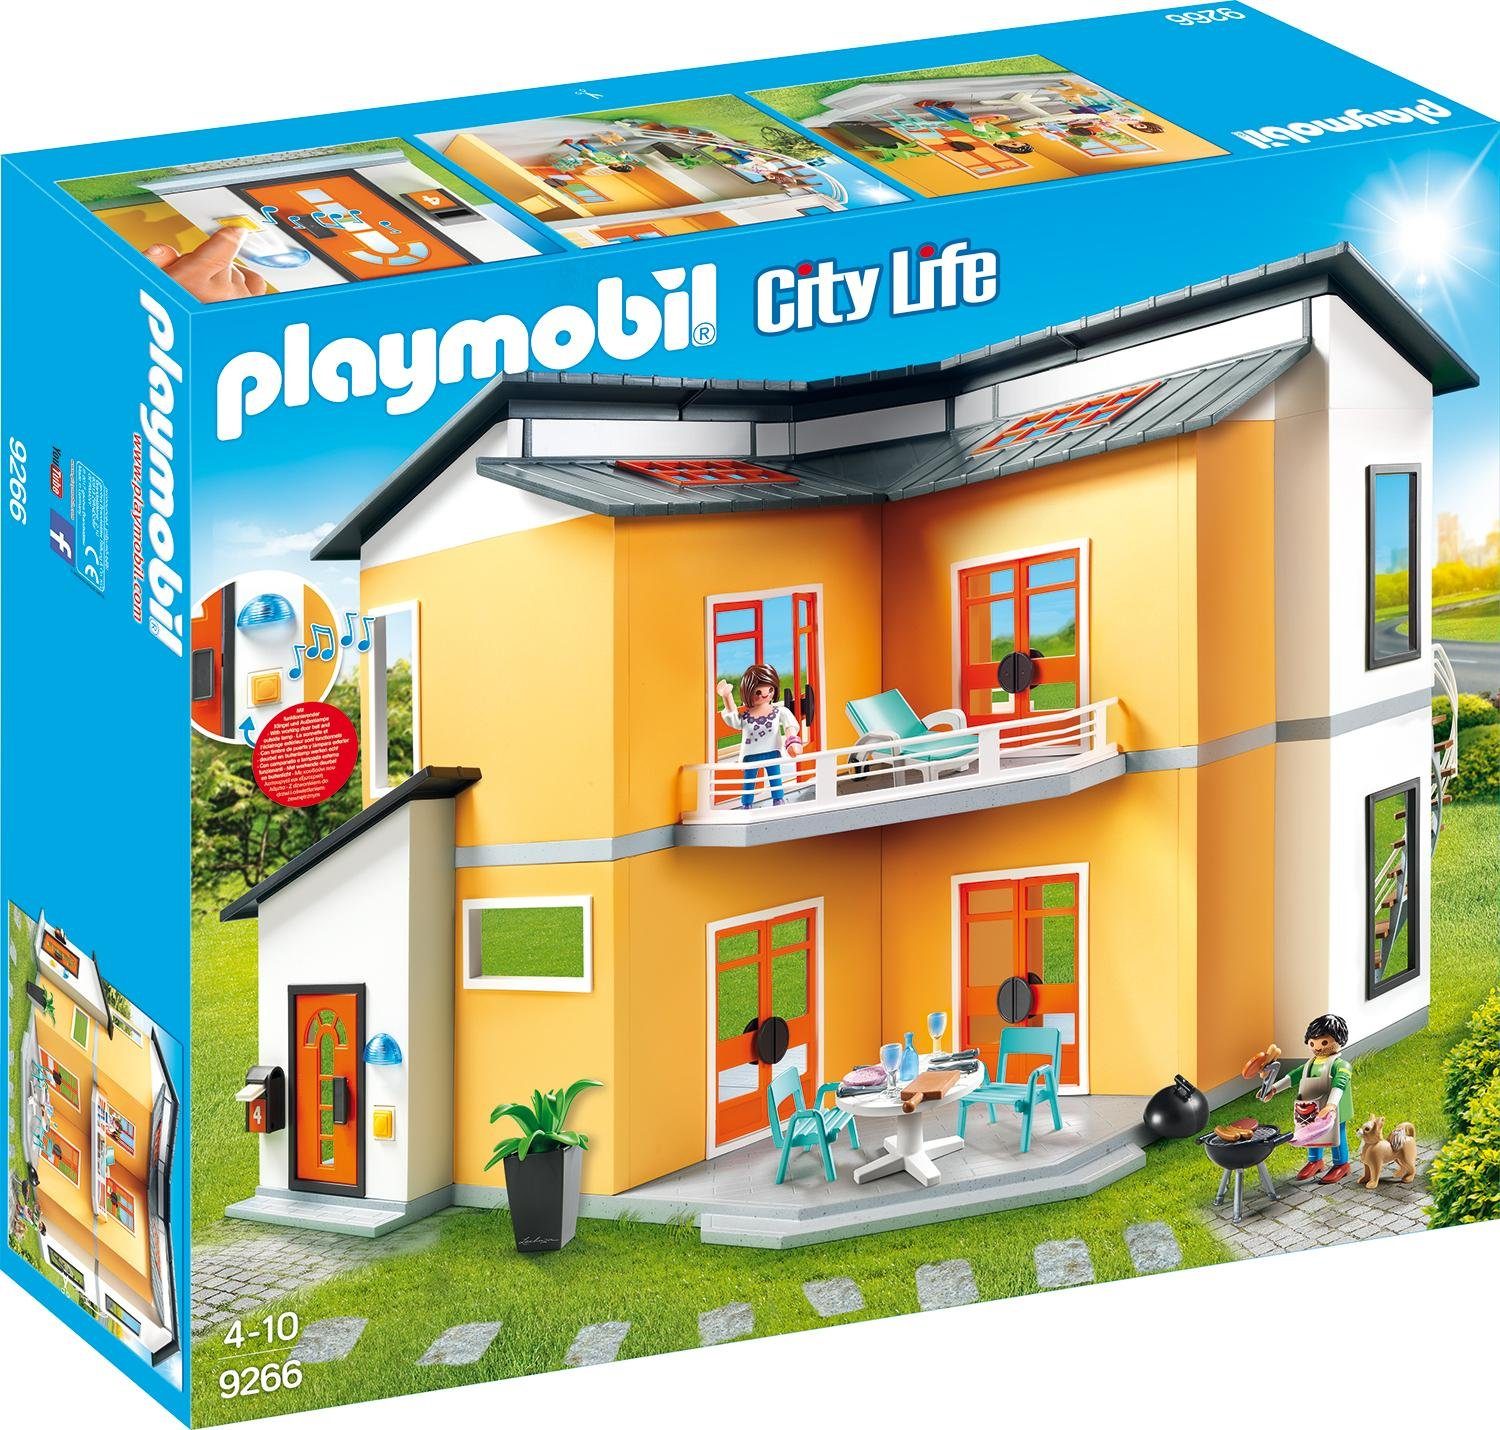 Playmobil Spielzeug online kaufen | OTTO